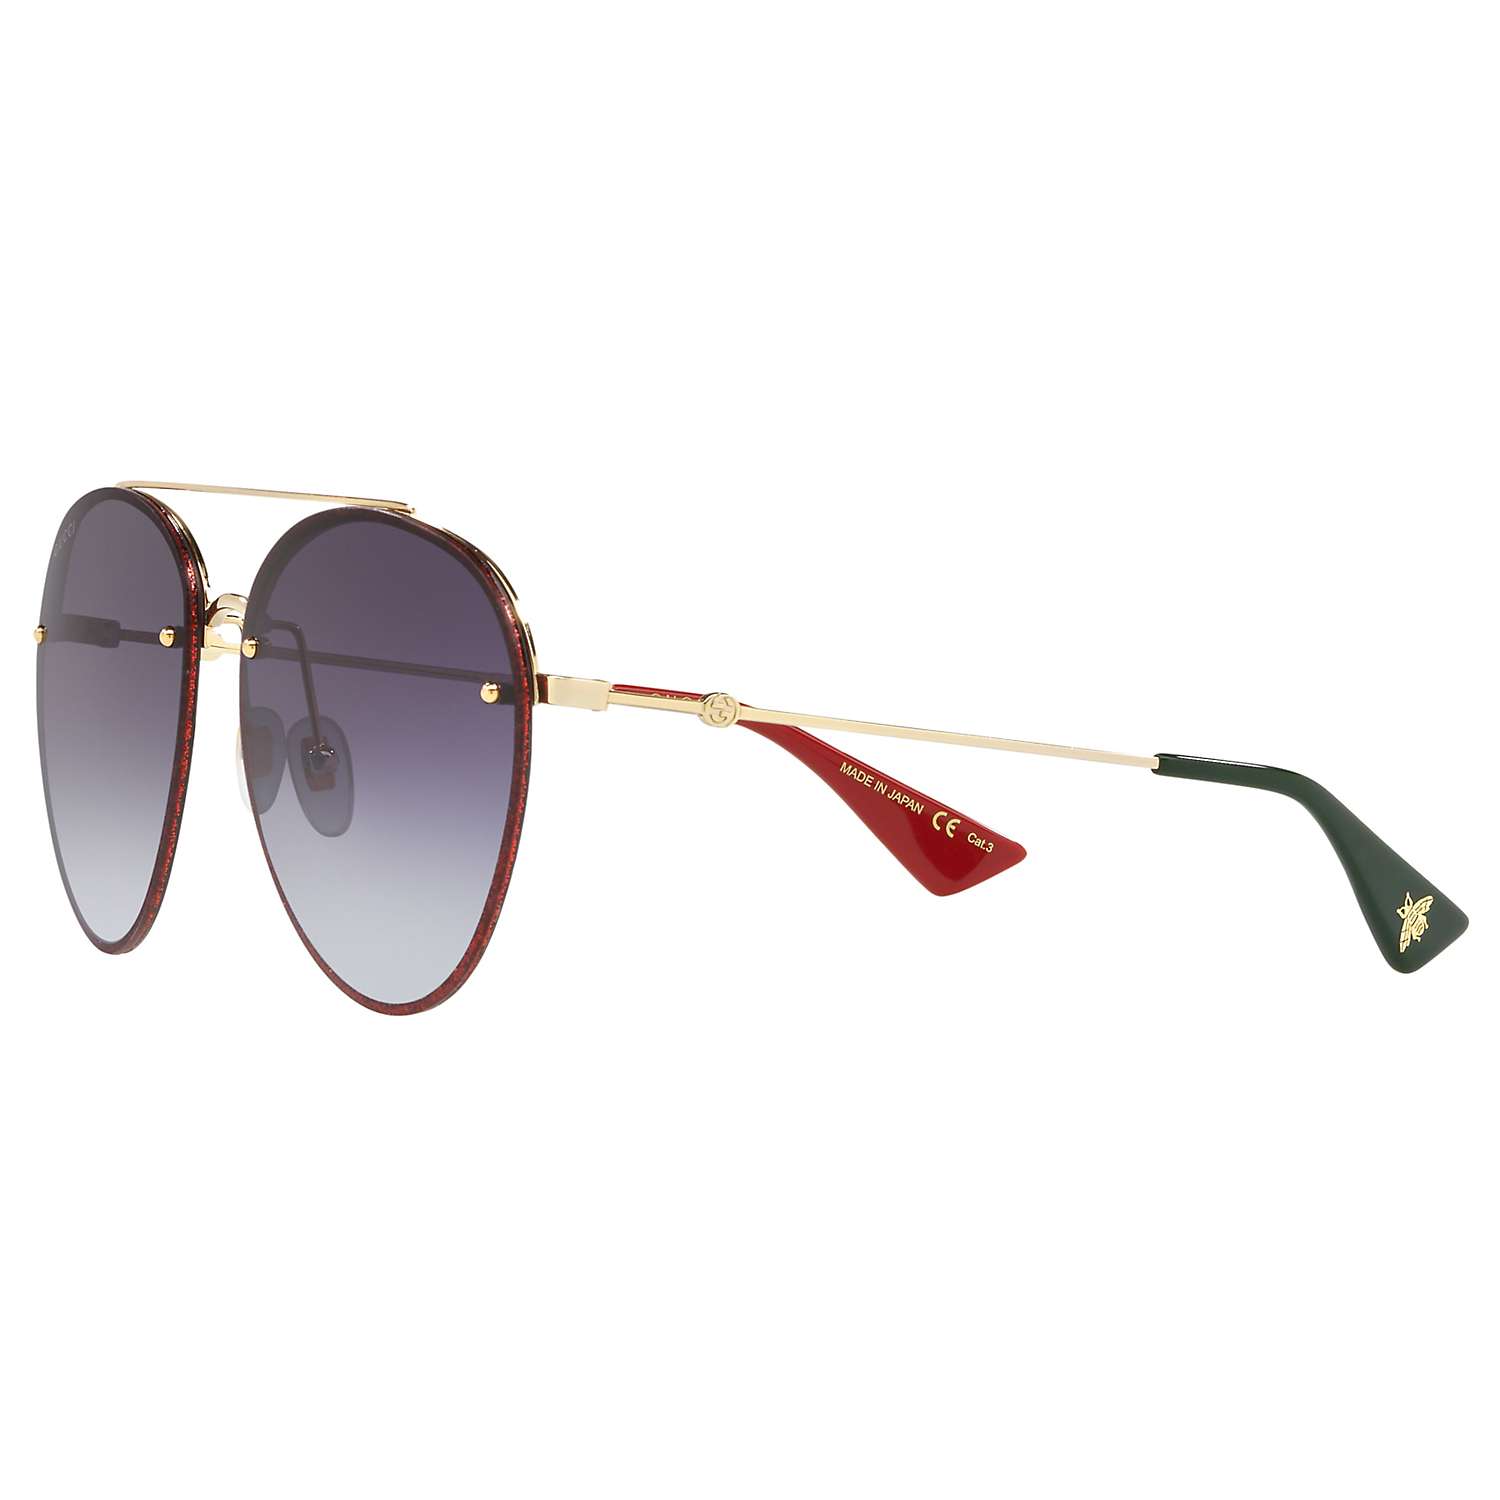 Buy Gucci GG0351S Women's Aviator Sunglasses Online at johnlewis.com